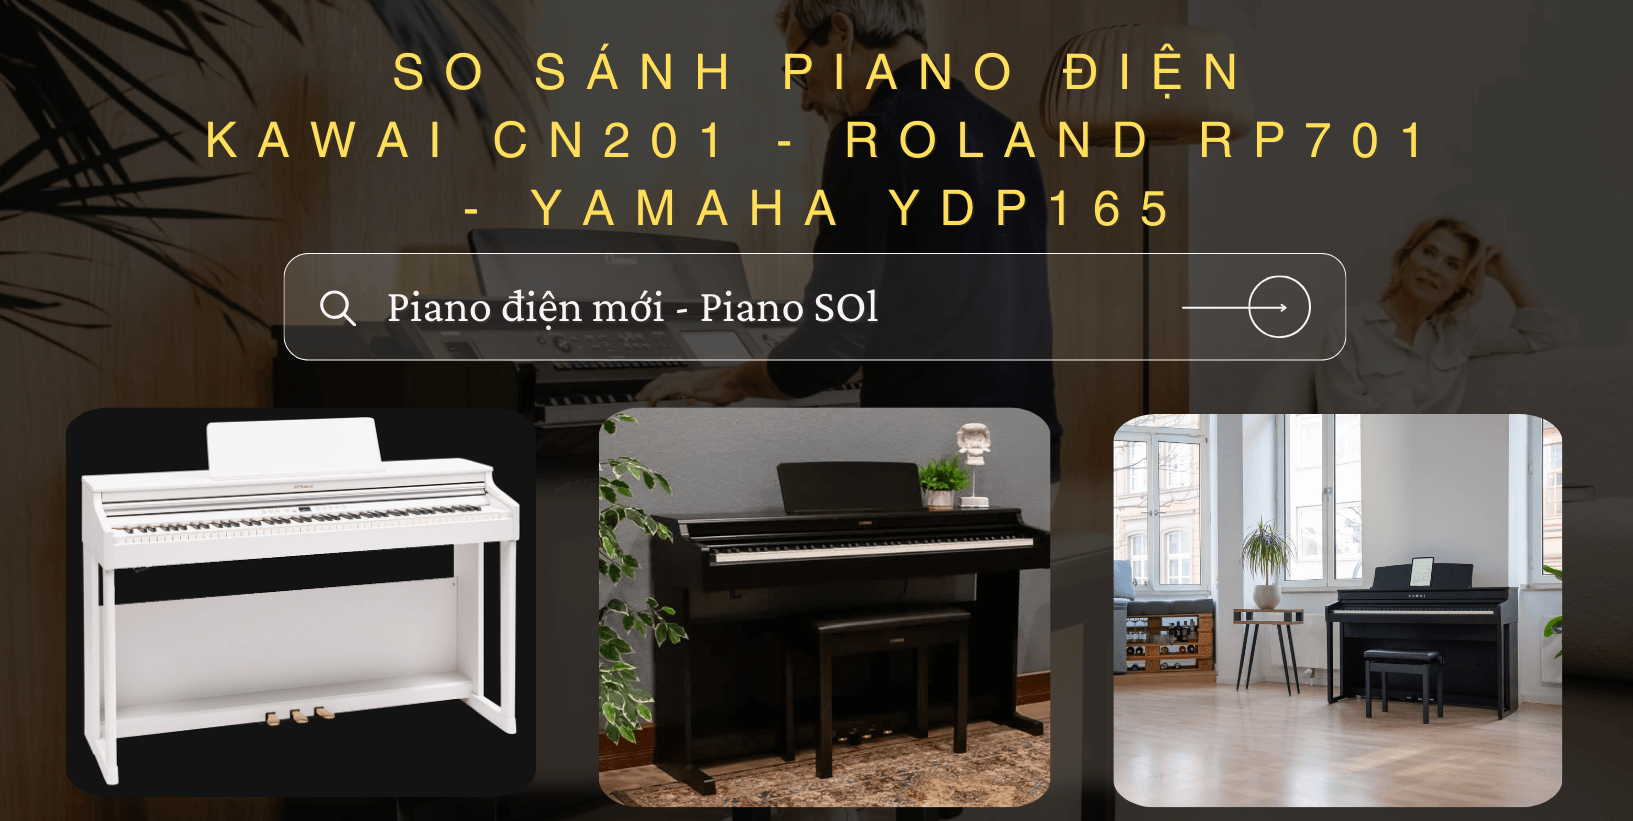 Review Piano điện Kawai CN201 Roland RP701 - Yamaha YDP165